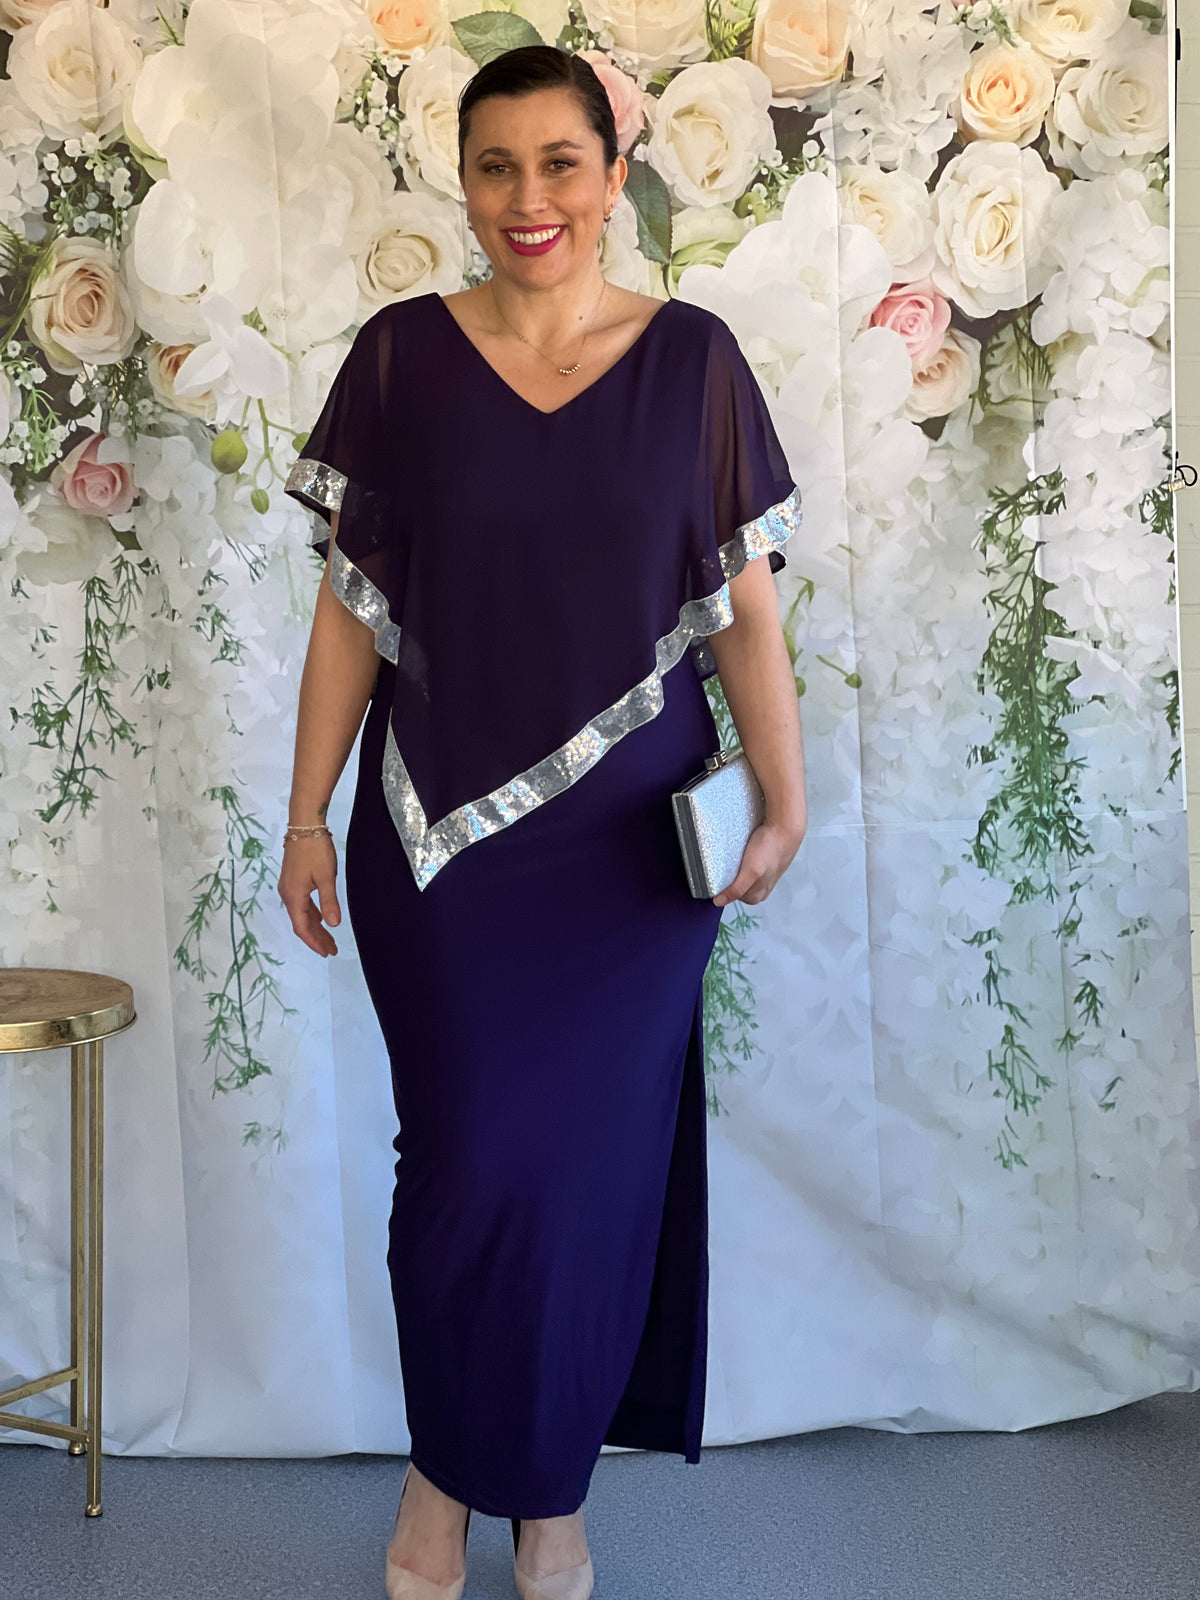 Vesta Purple Evening Dress